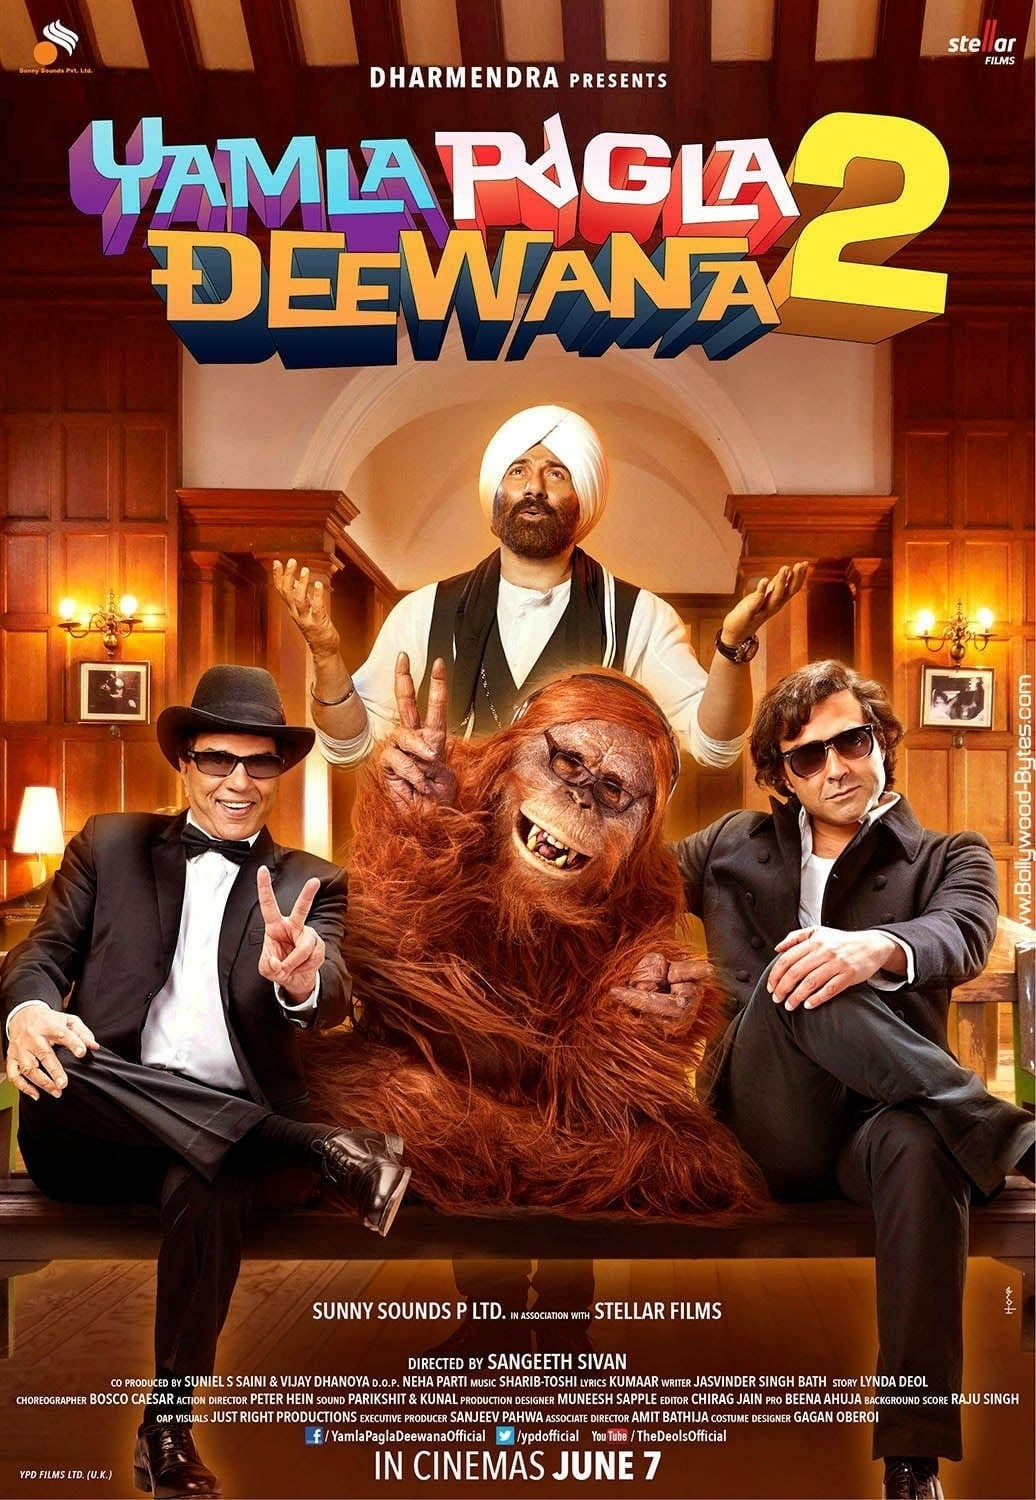 Poster for the movie "Yamla Pagla Deewana 2"